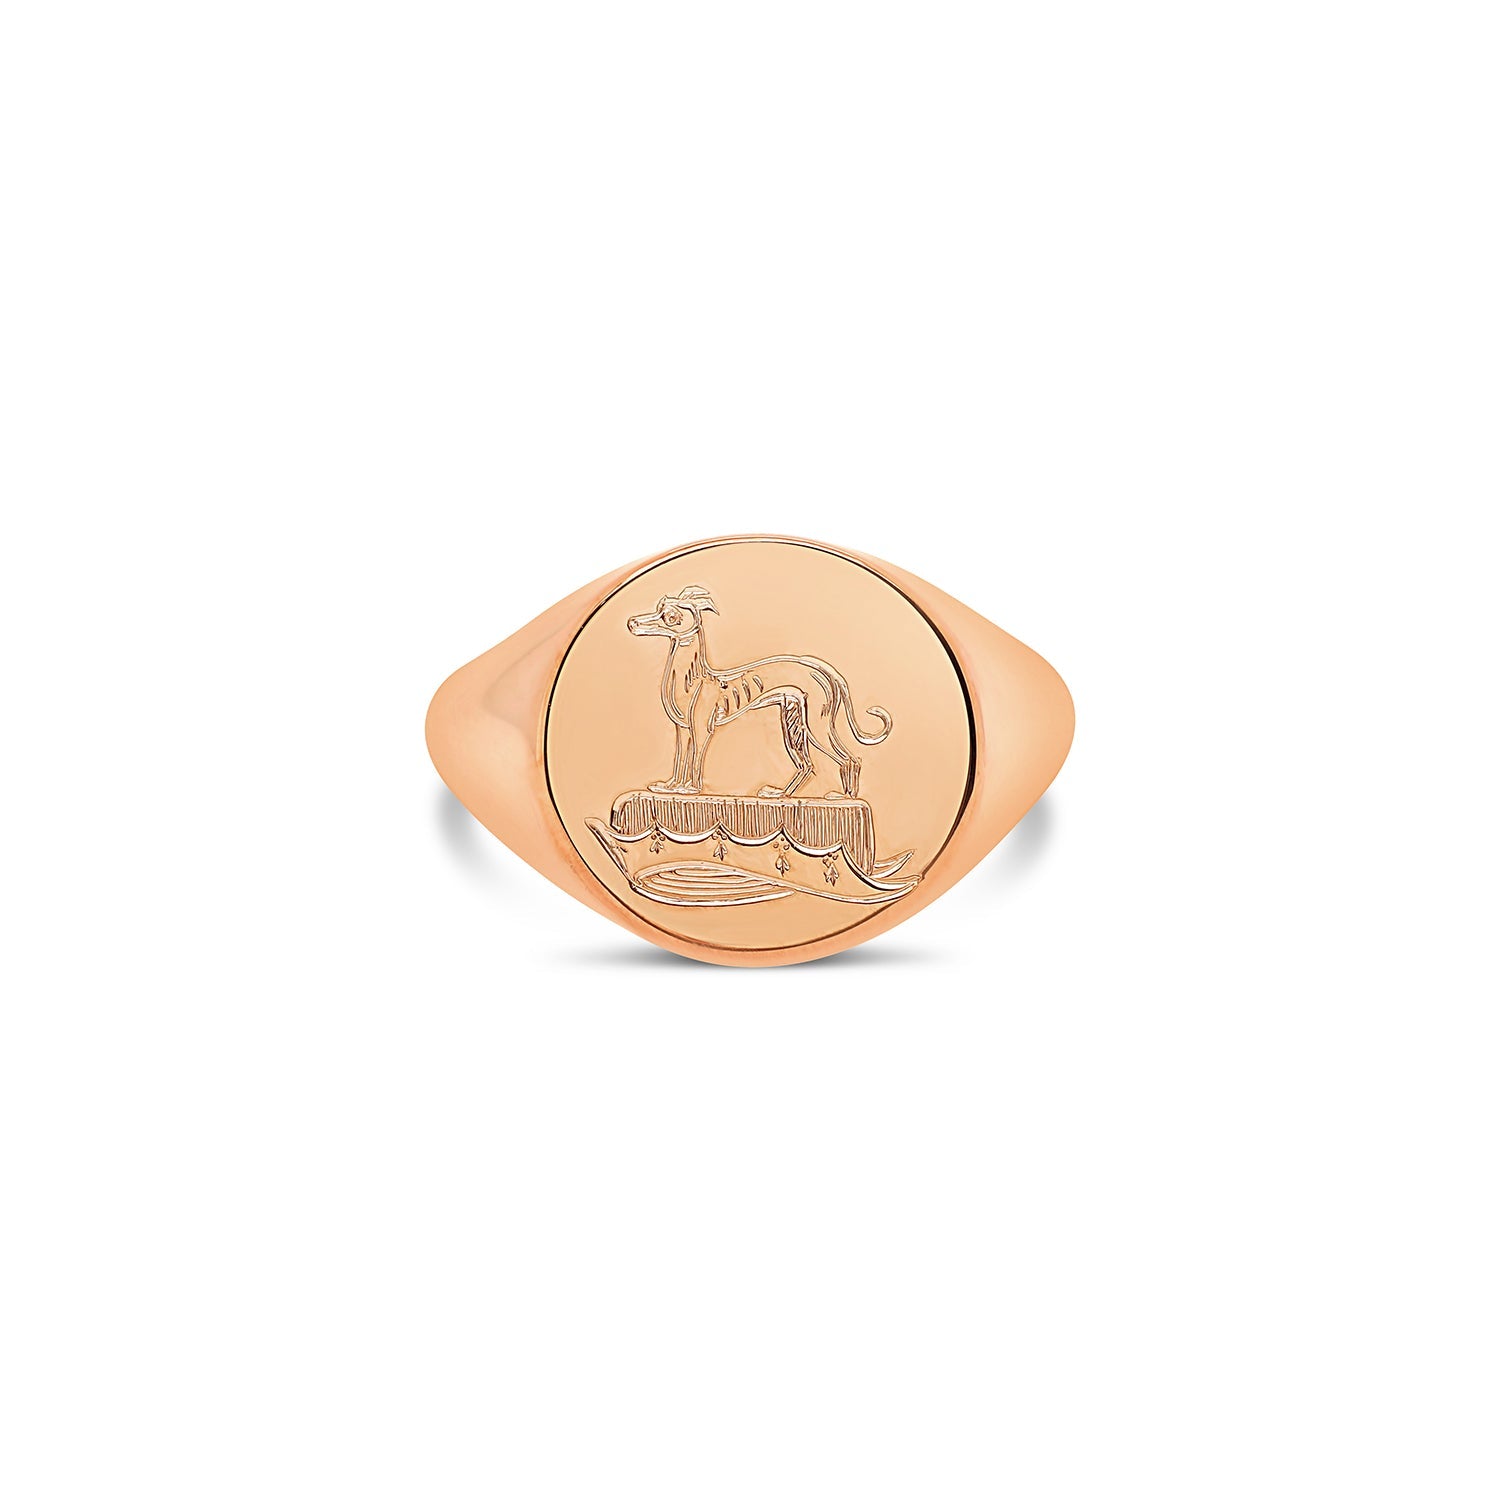 Classic Round Signet Ring rose gold